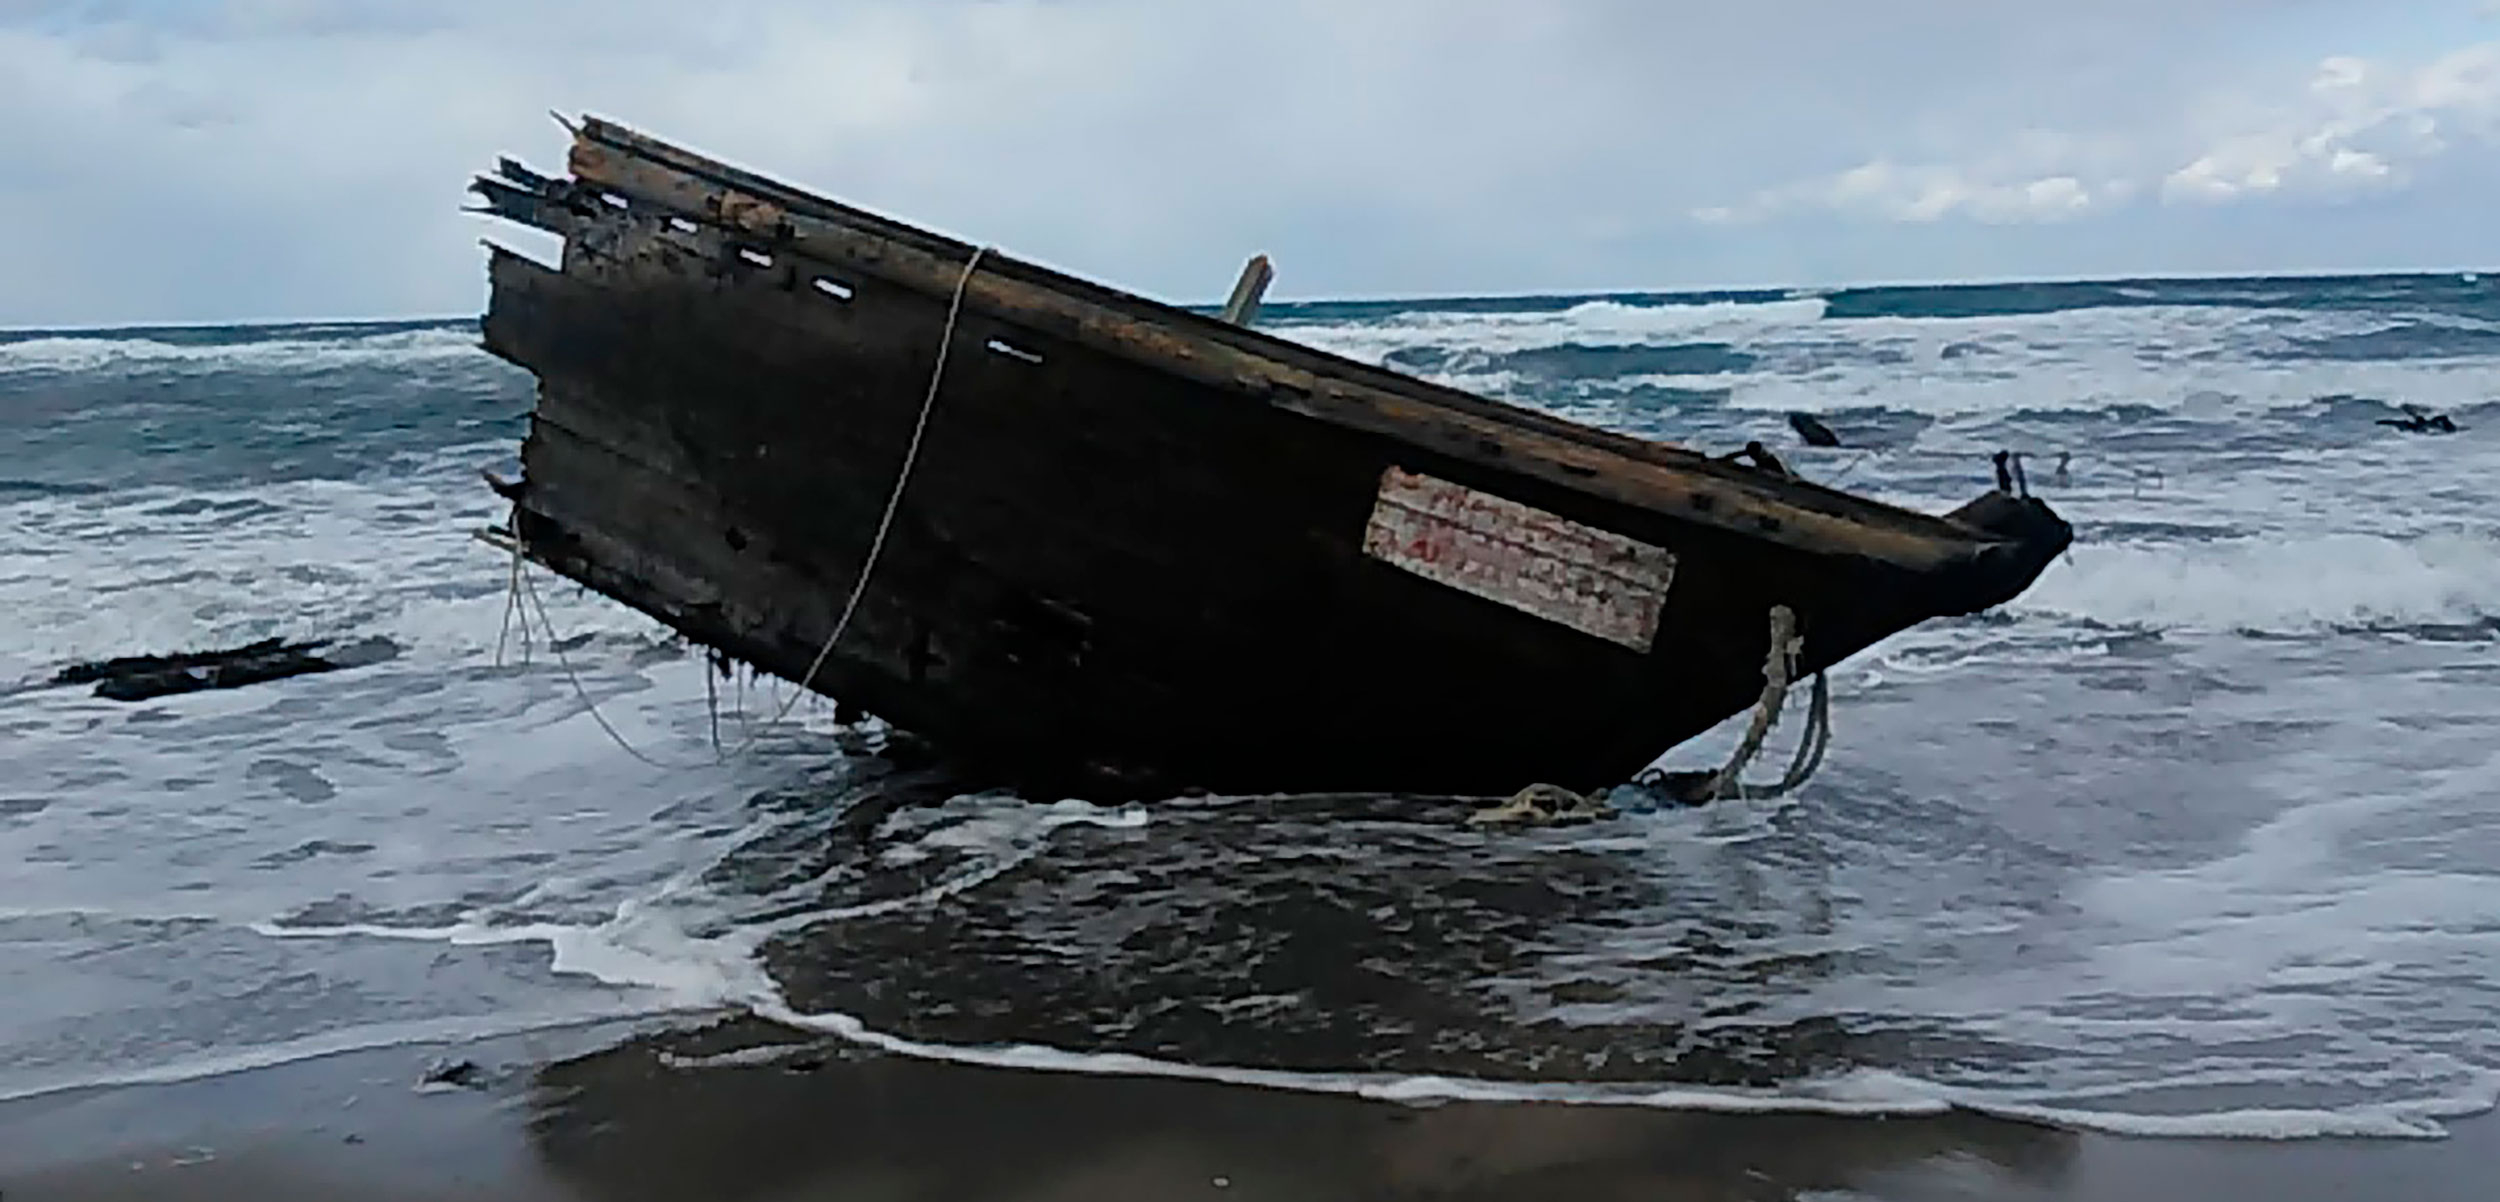 In December 2019, a ship washed up on Sado Island, Japan